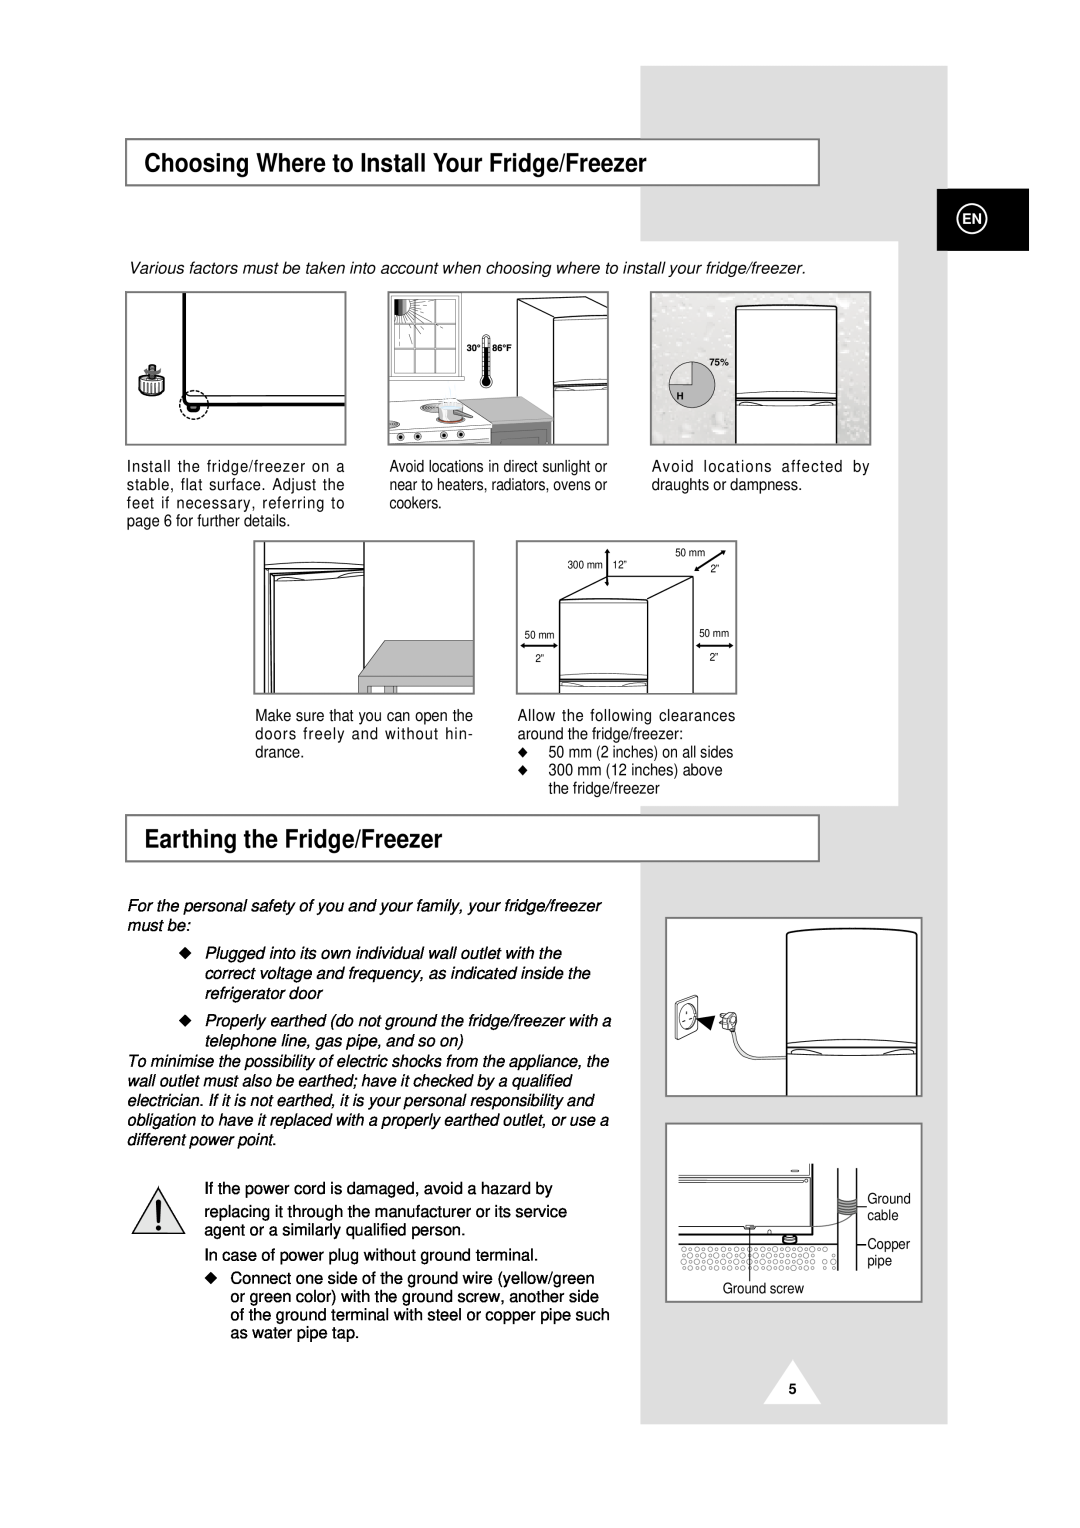 Samsung DA99-00478C instruction manual Choosing Where to Install Your Fridge/Freezer, Earthing the Fridge/Freezer 